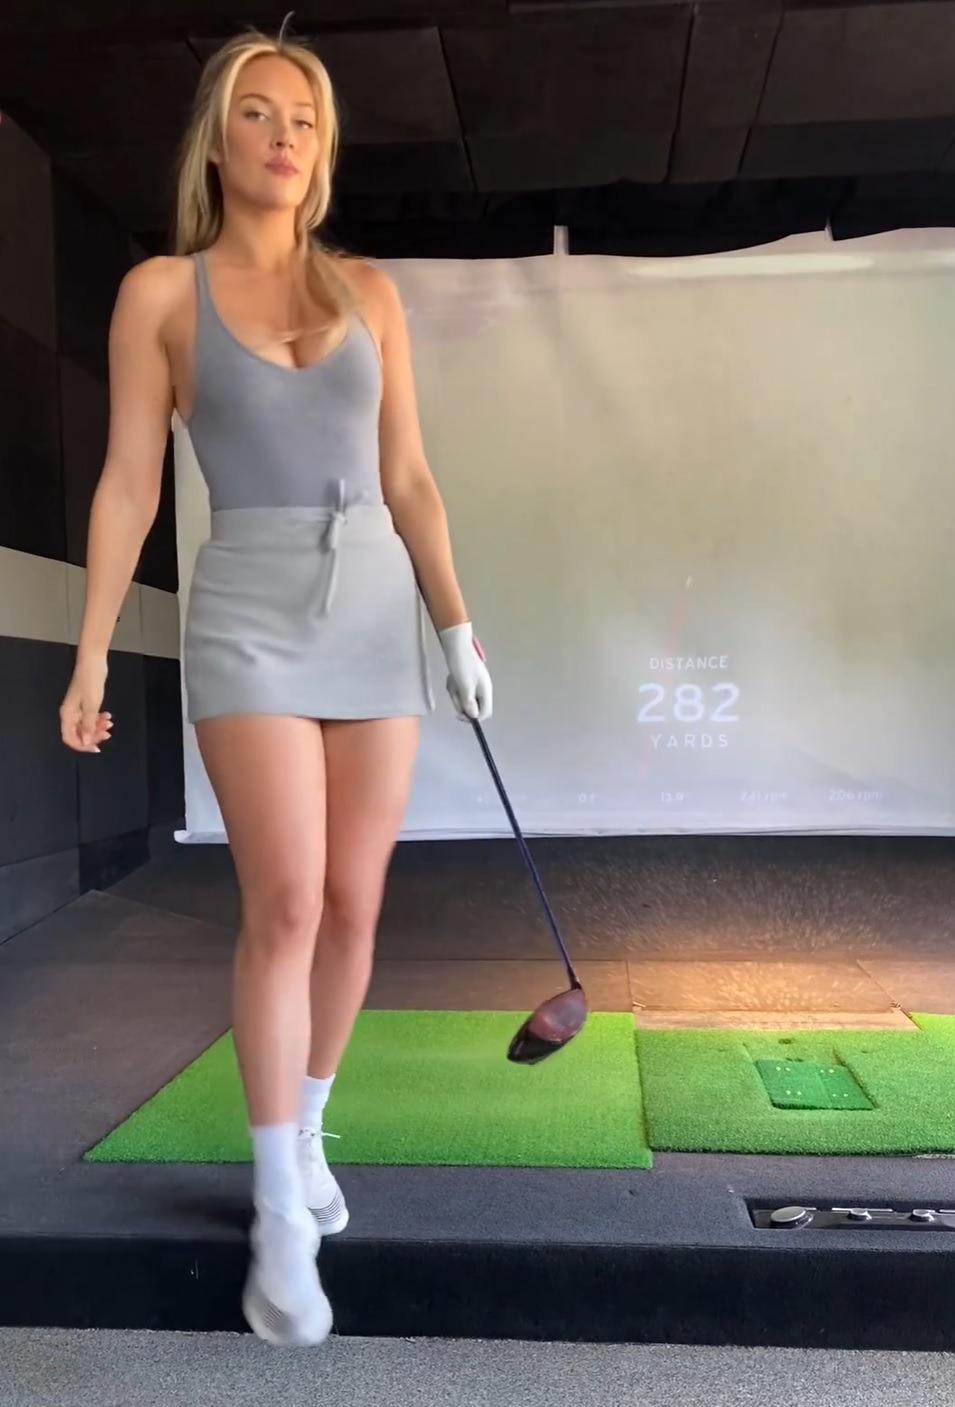 , Paige Spiranac crashes huge 300-yard drive on simulator as golf beauty shows she still has incredible skills